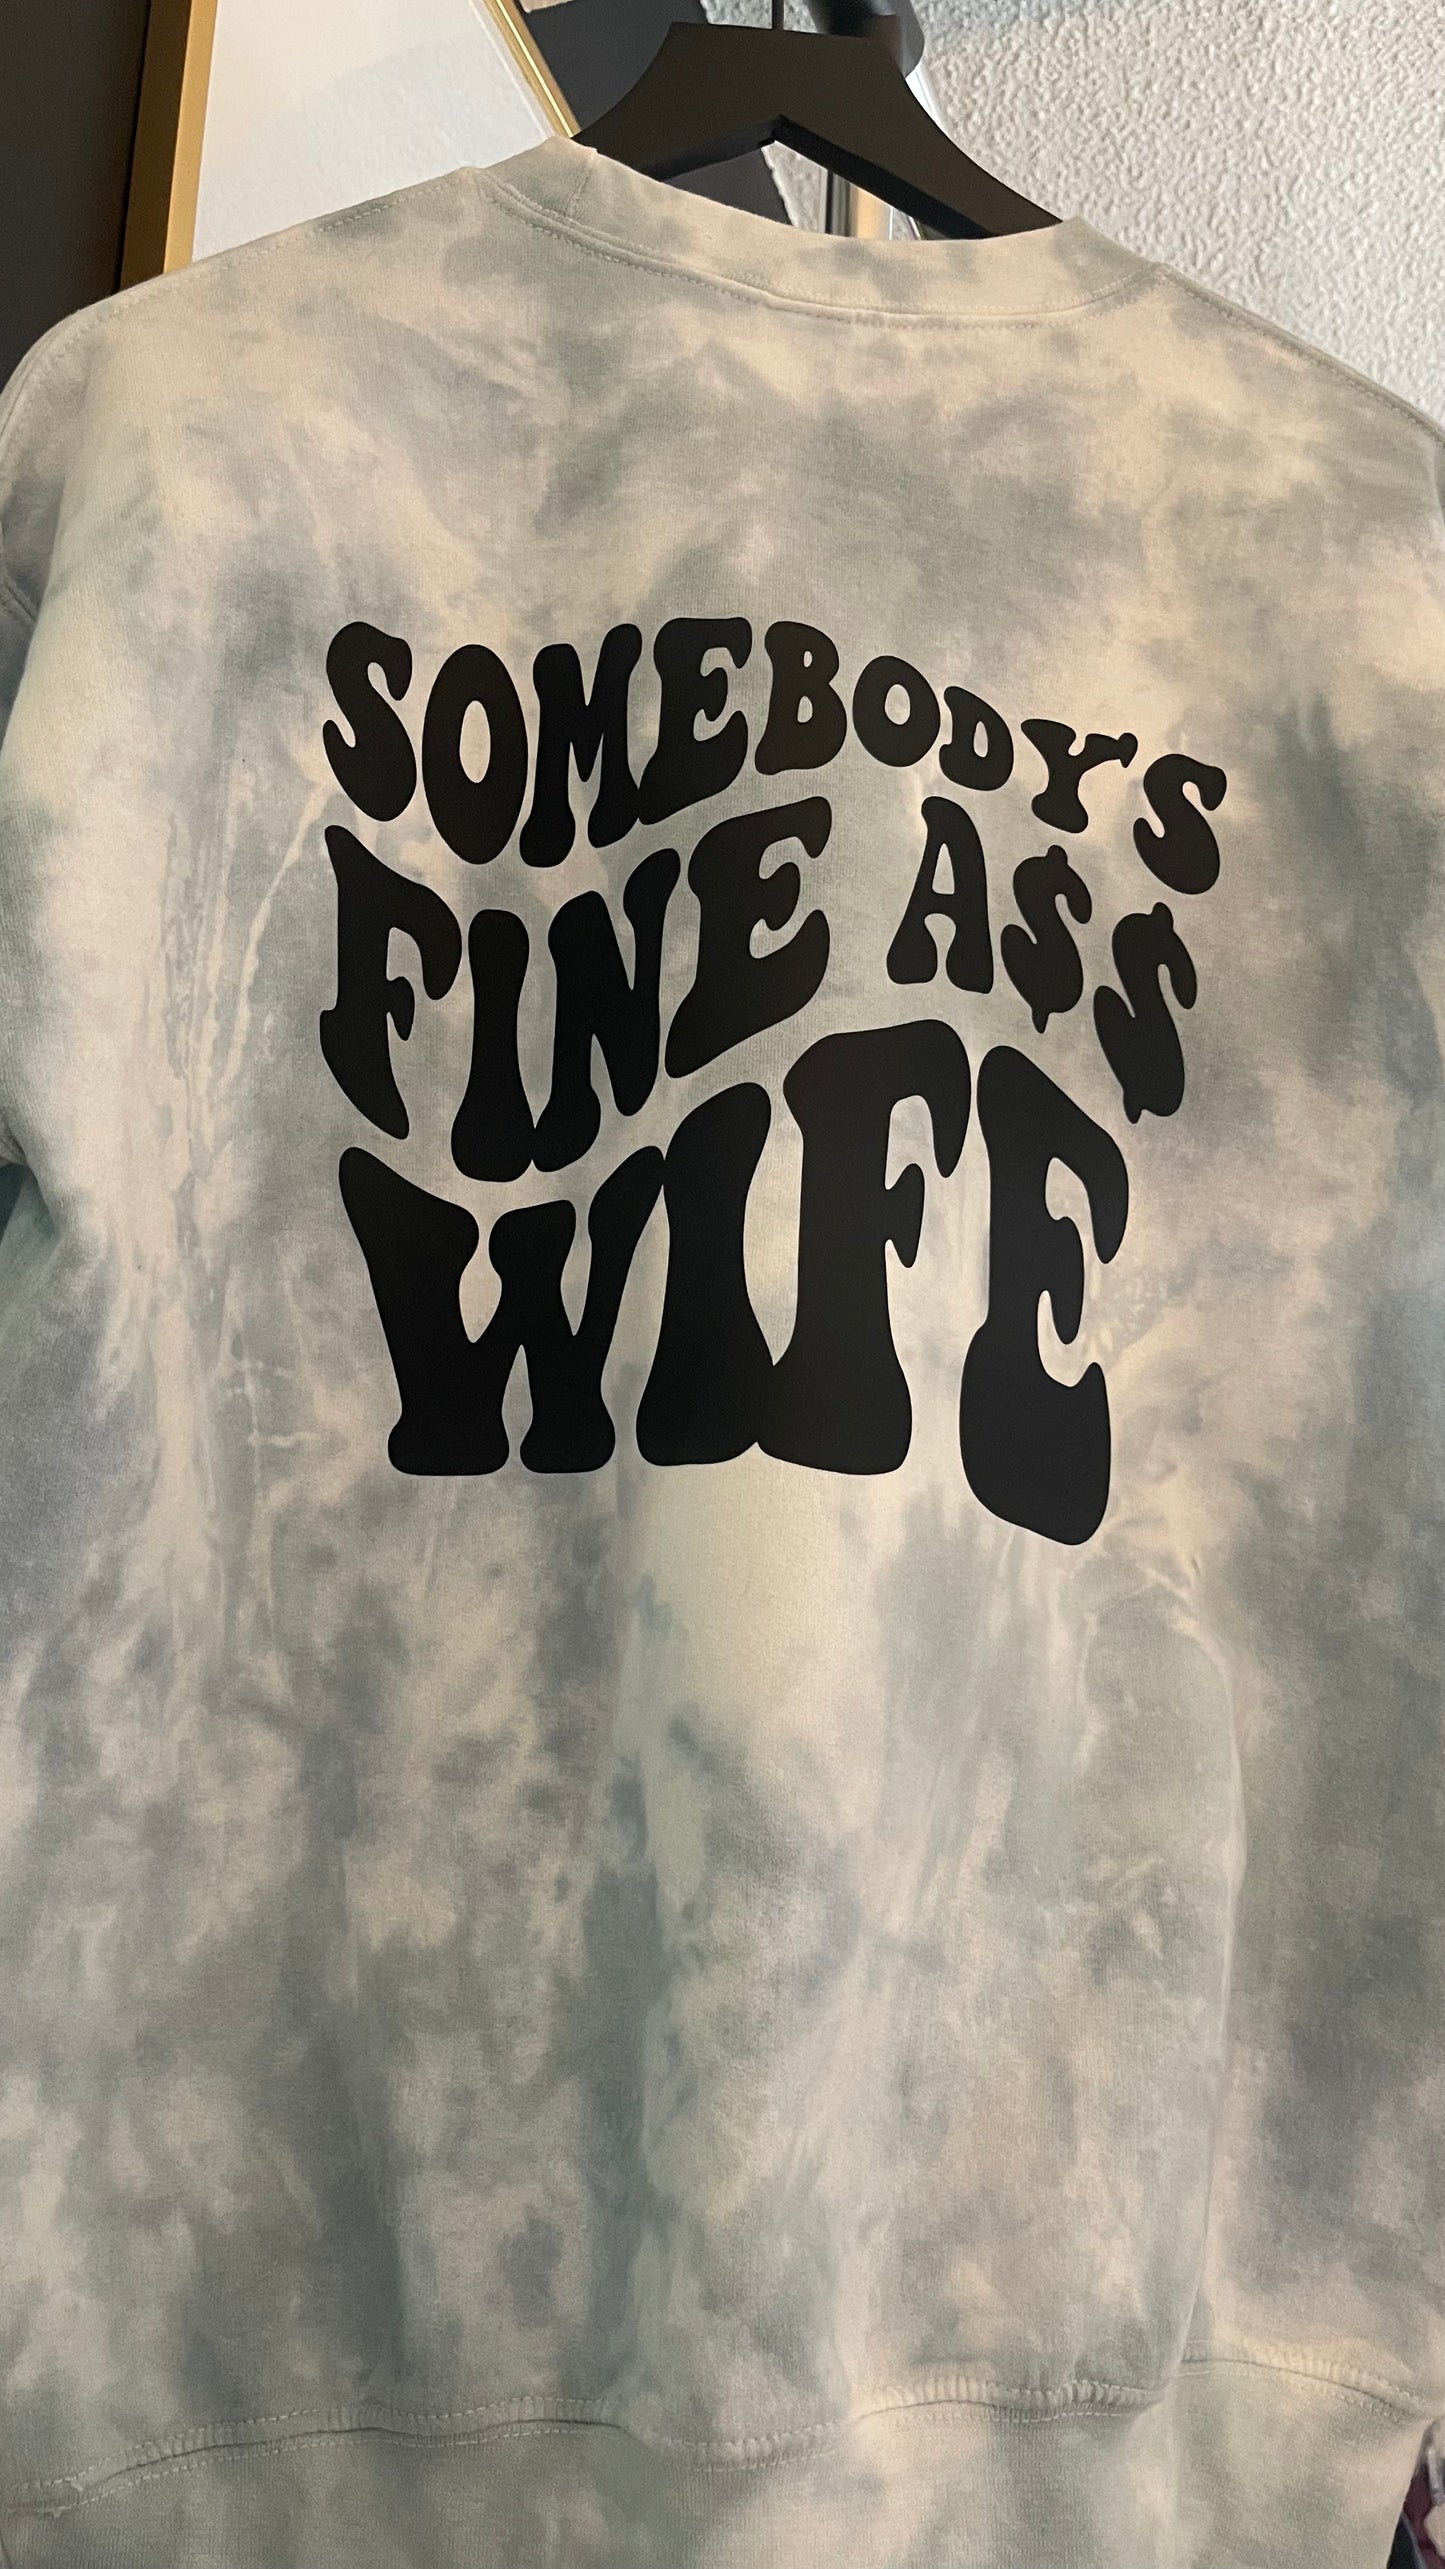 SOMEBODY’S FINE ASS WIFE